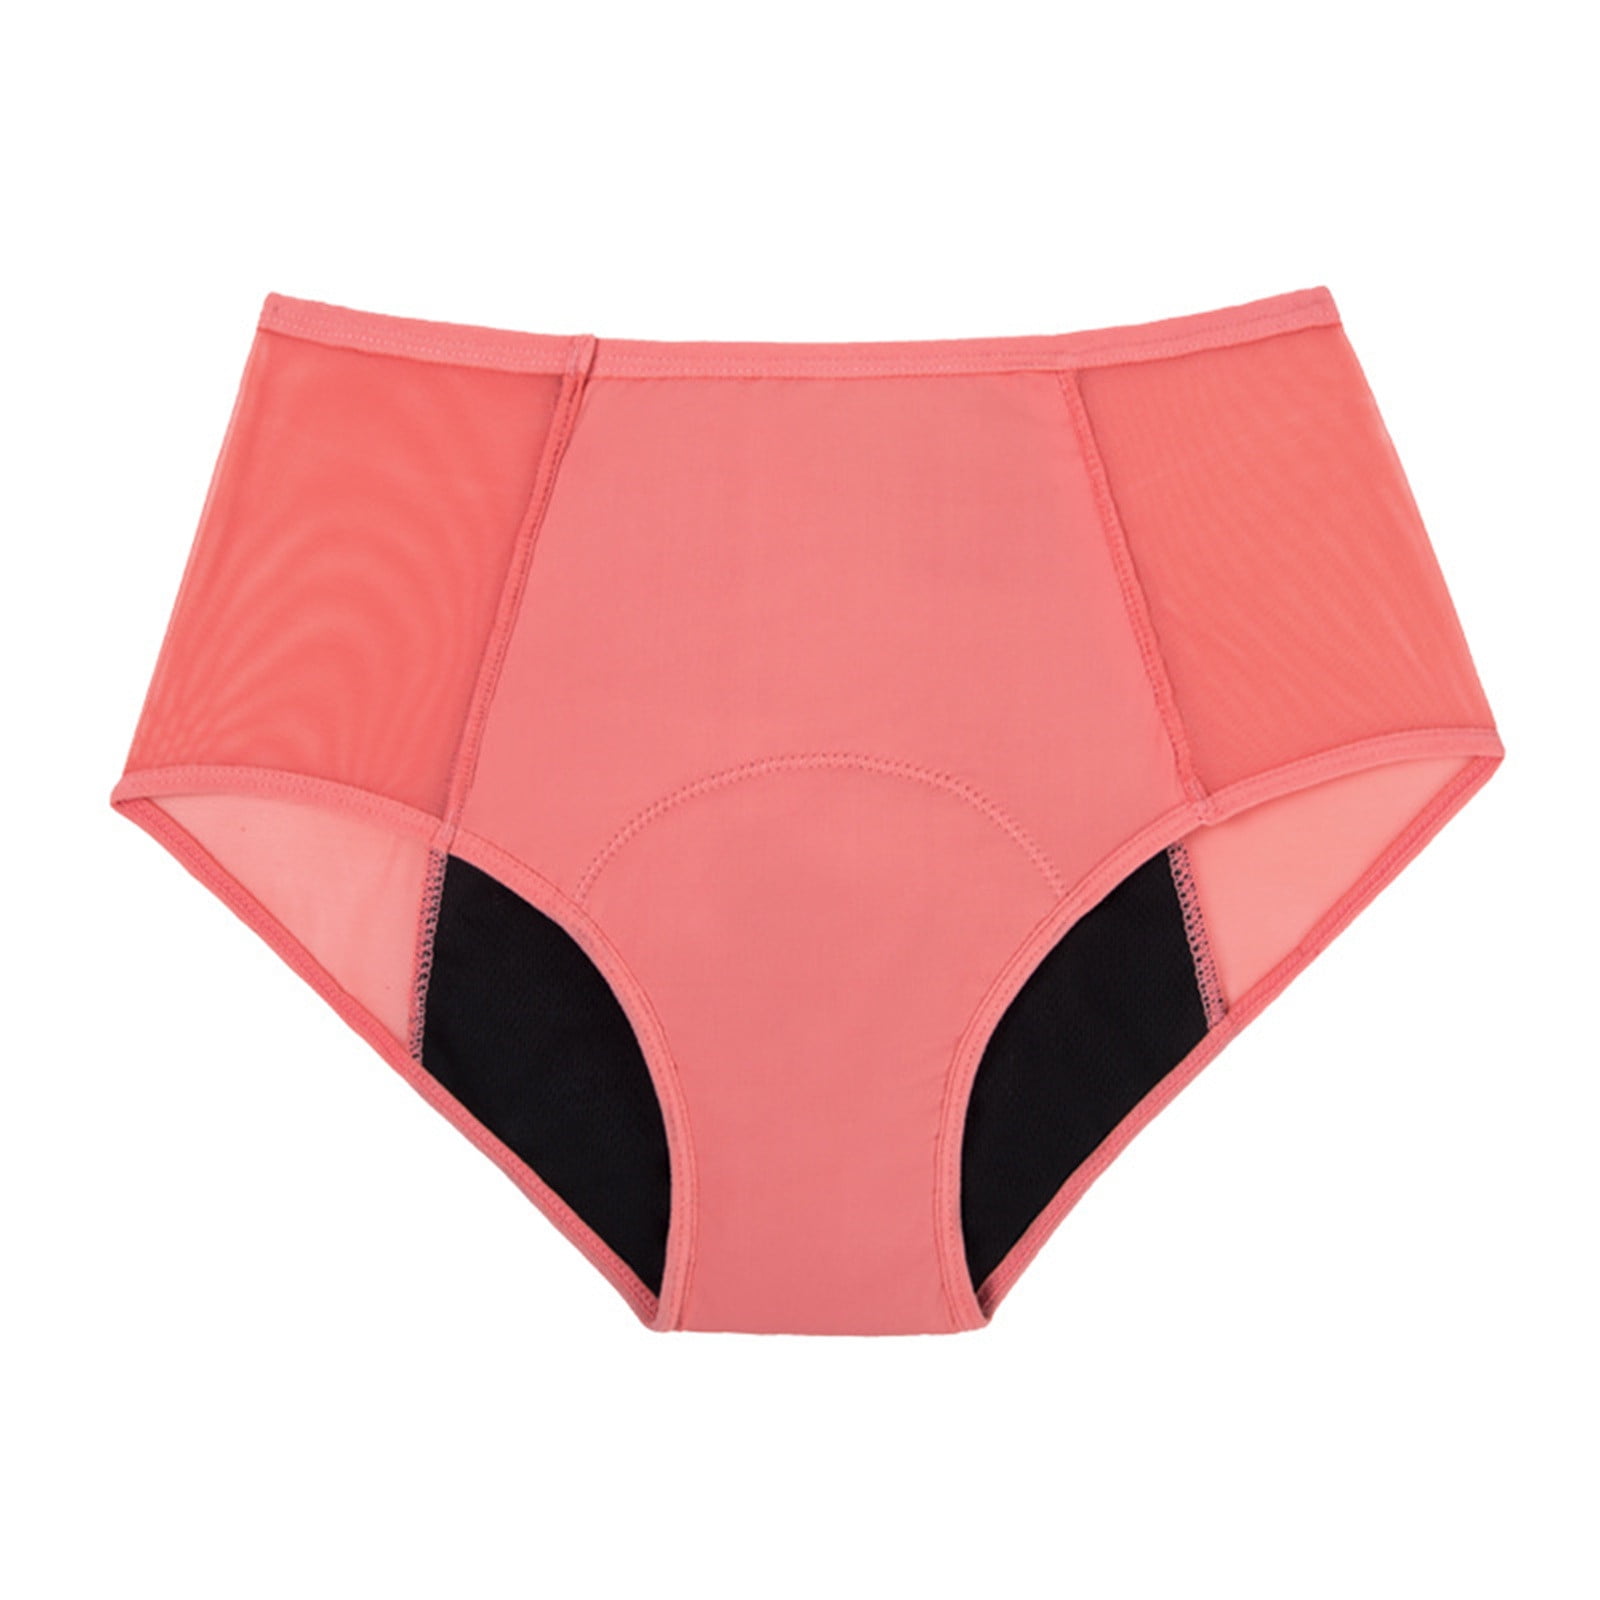 adviicd Panties for Women Underwear for Cotton l Panties Leakproof Easy  Clean Postpartum Briefs for Teens Ladies Girls Hot Pink XX-Large 